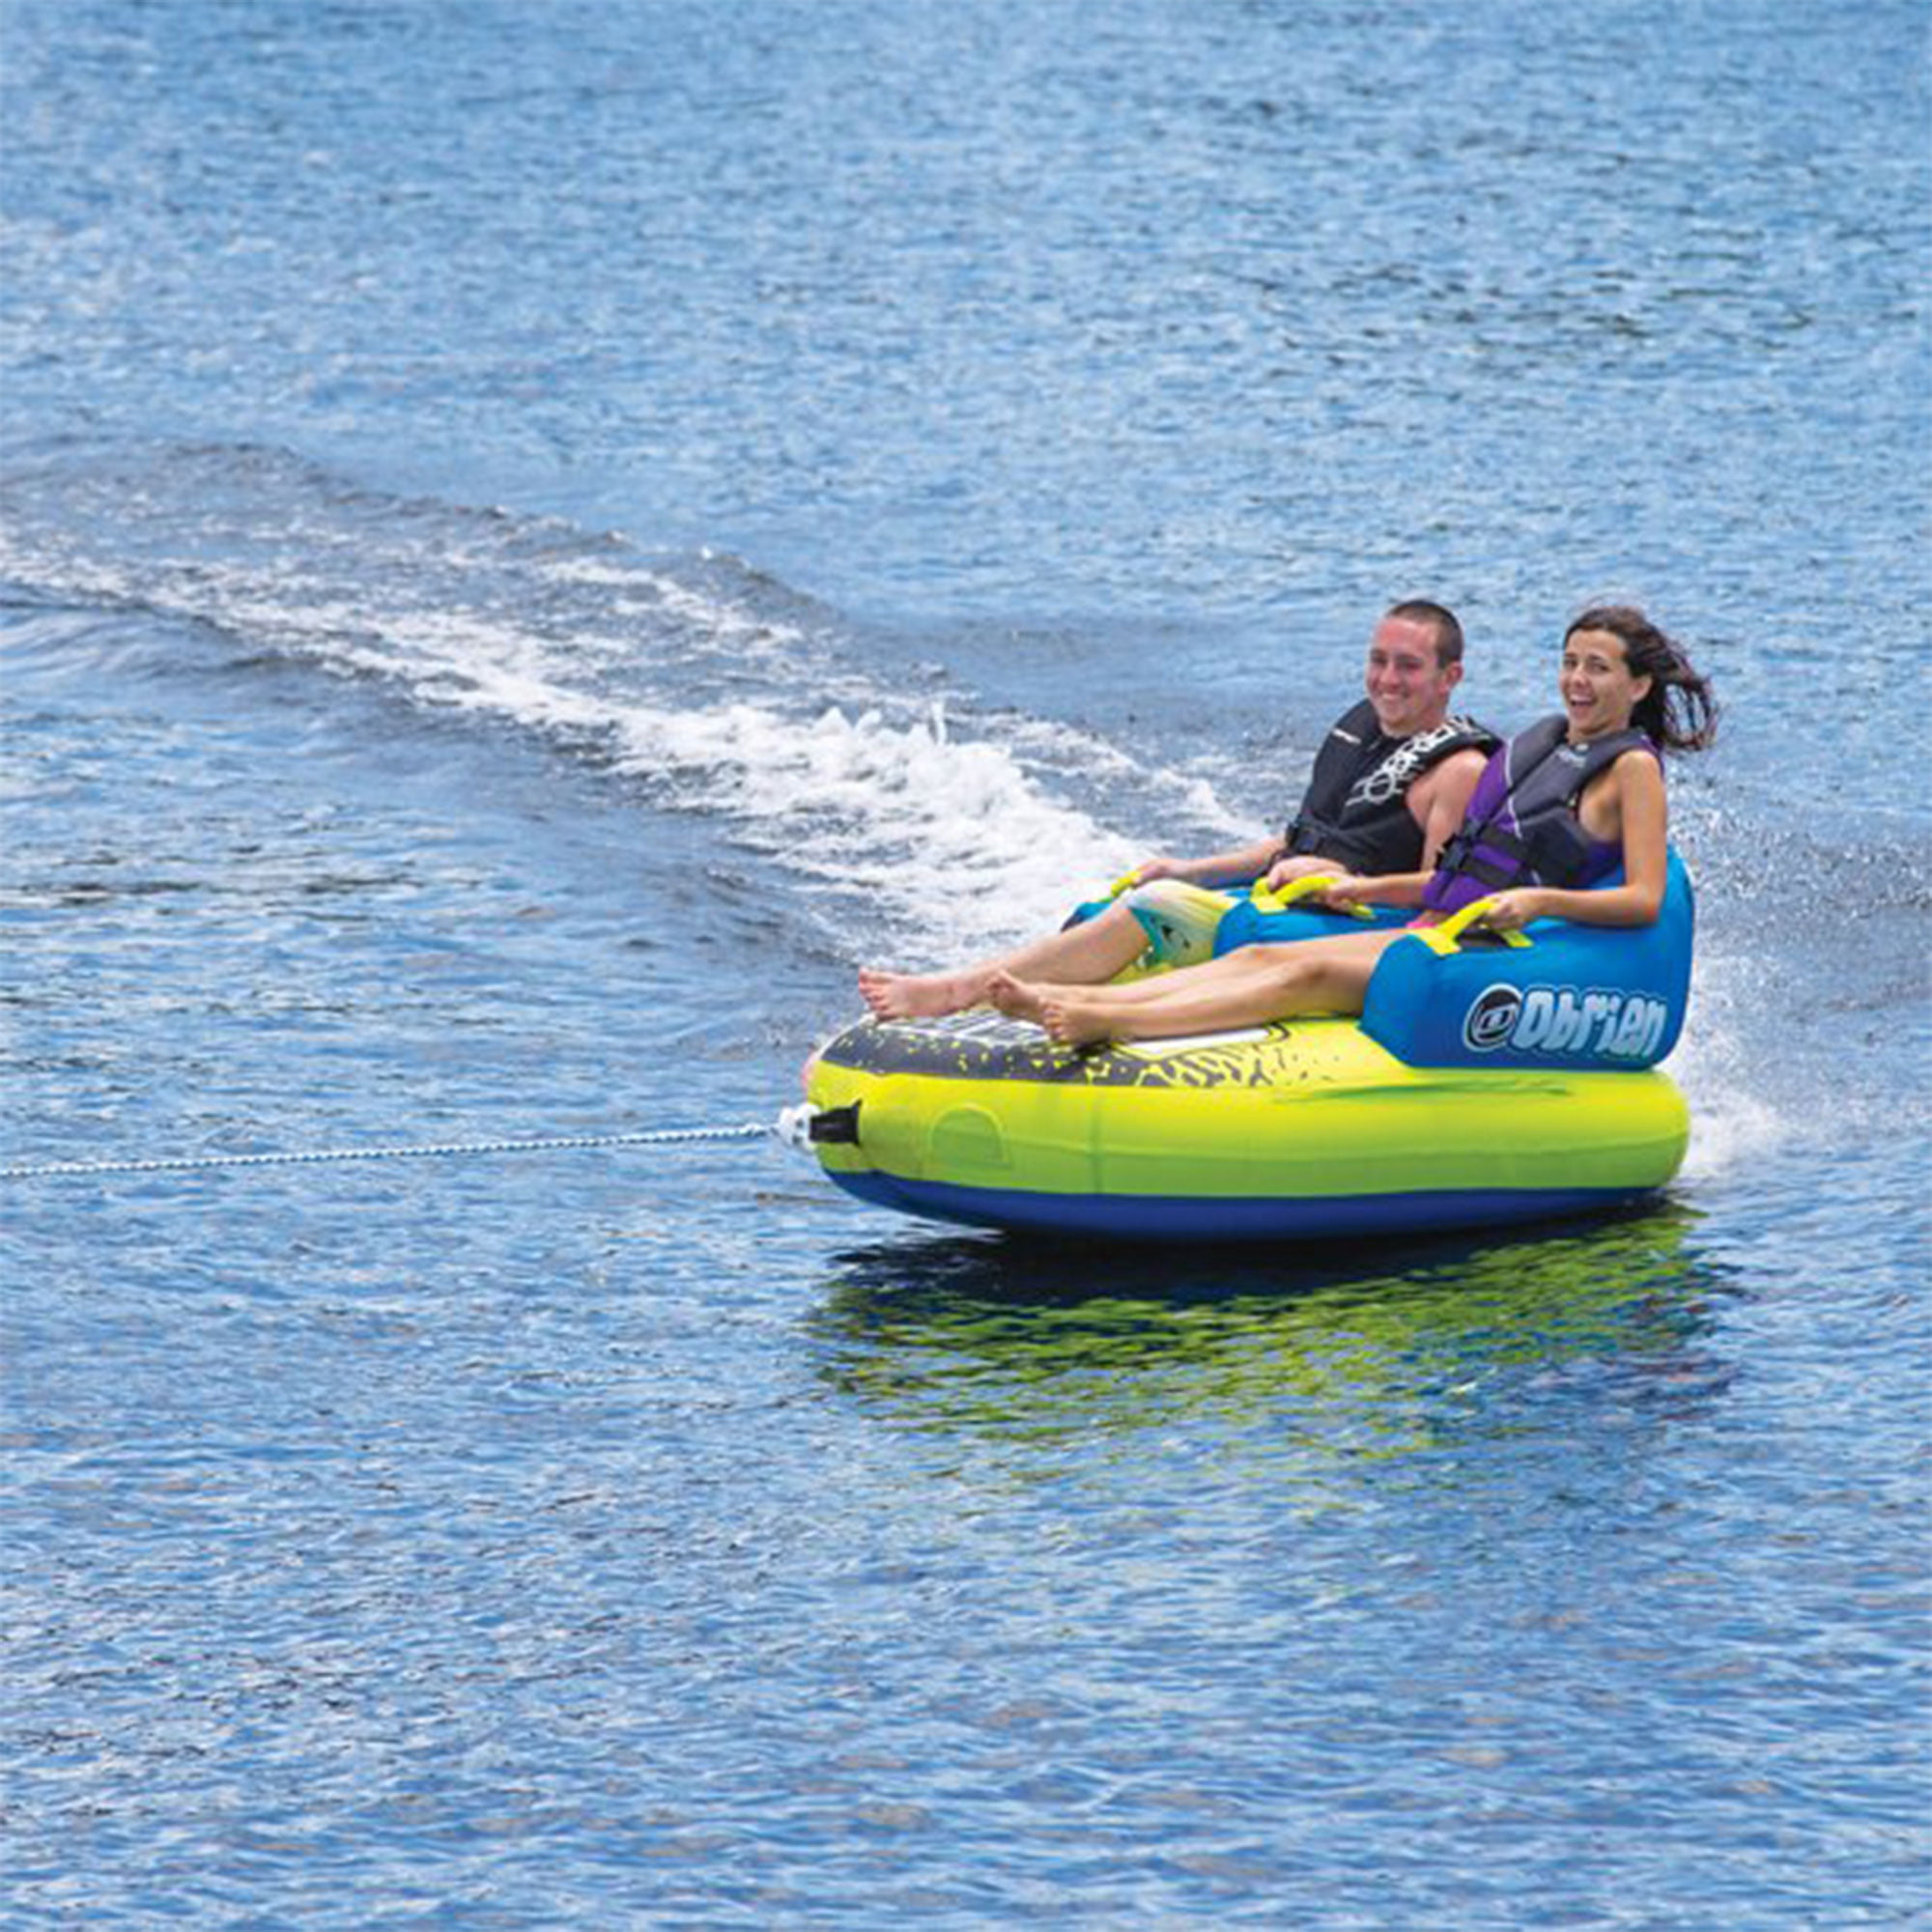 OBrien Barca 2 Kickback Inflatable 2 Person Rider Boat Water Tube Raft - 2